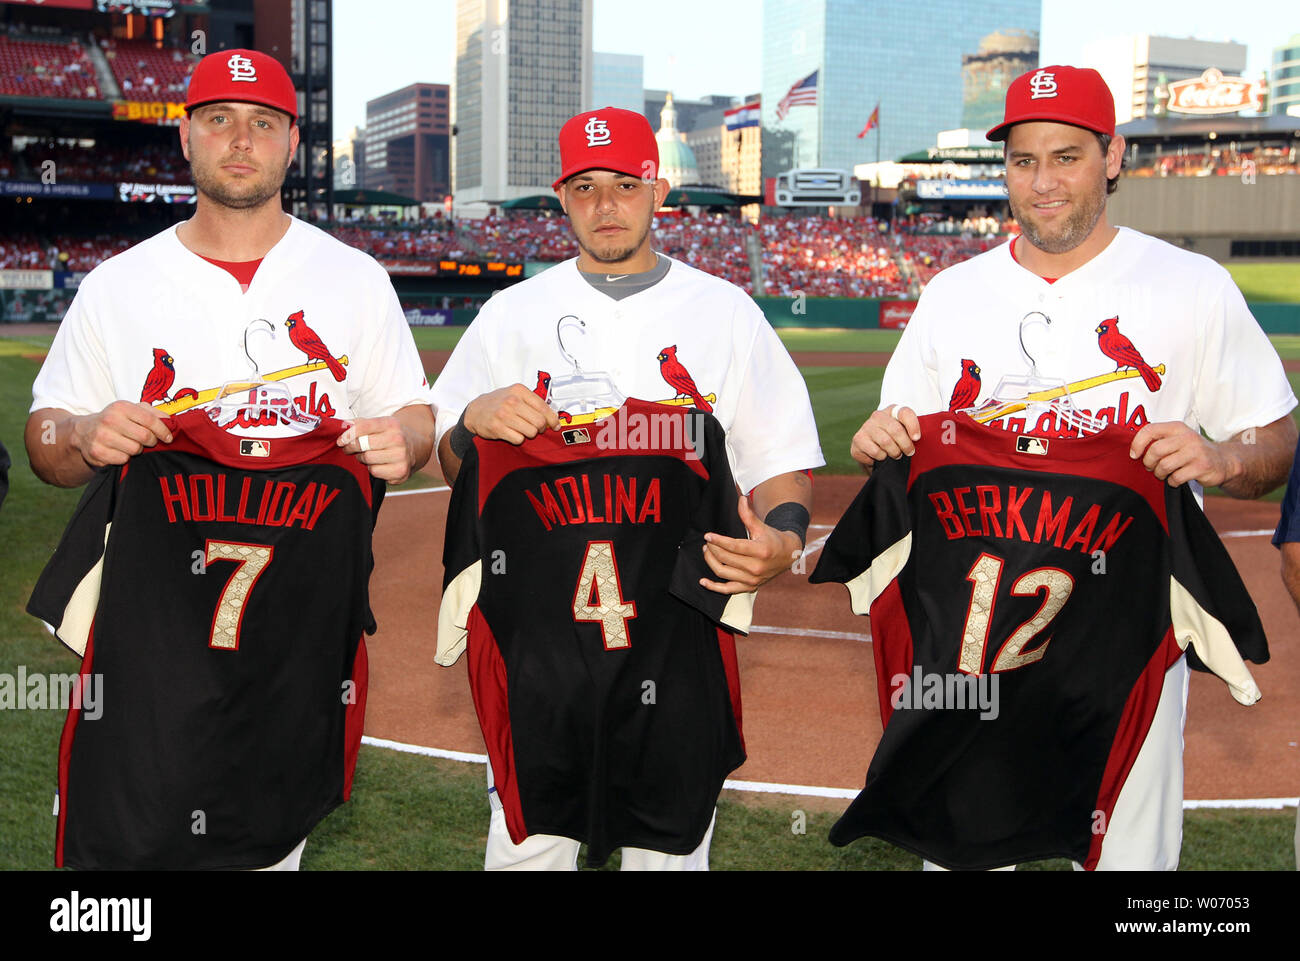 cardinals all star jerseys